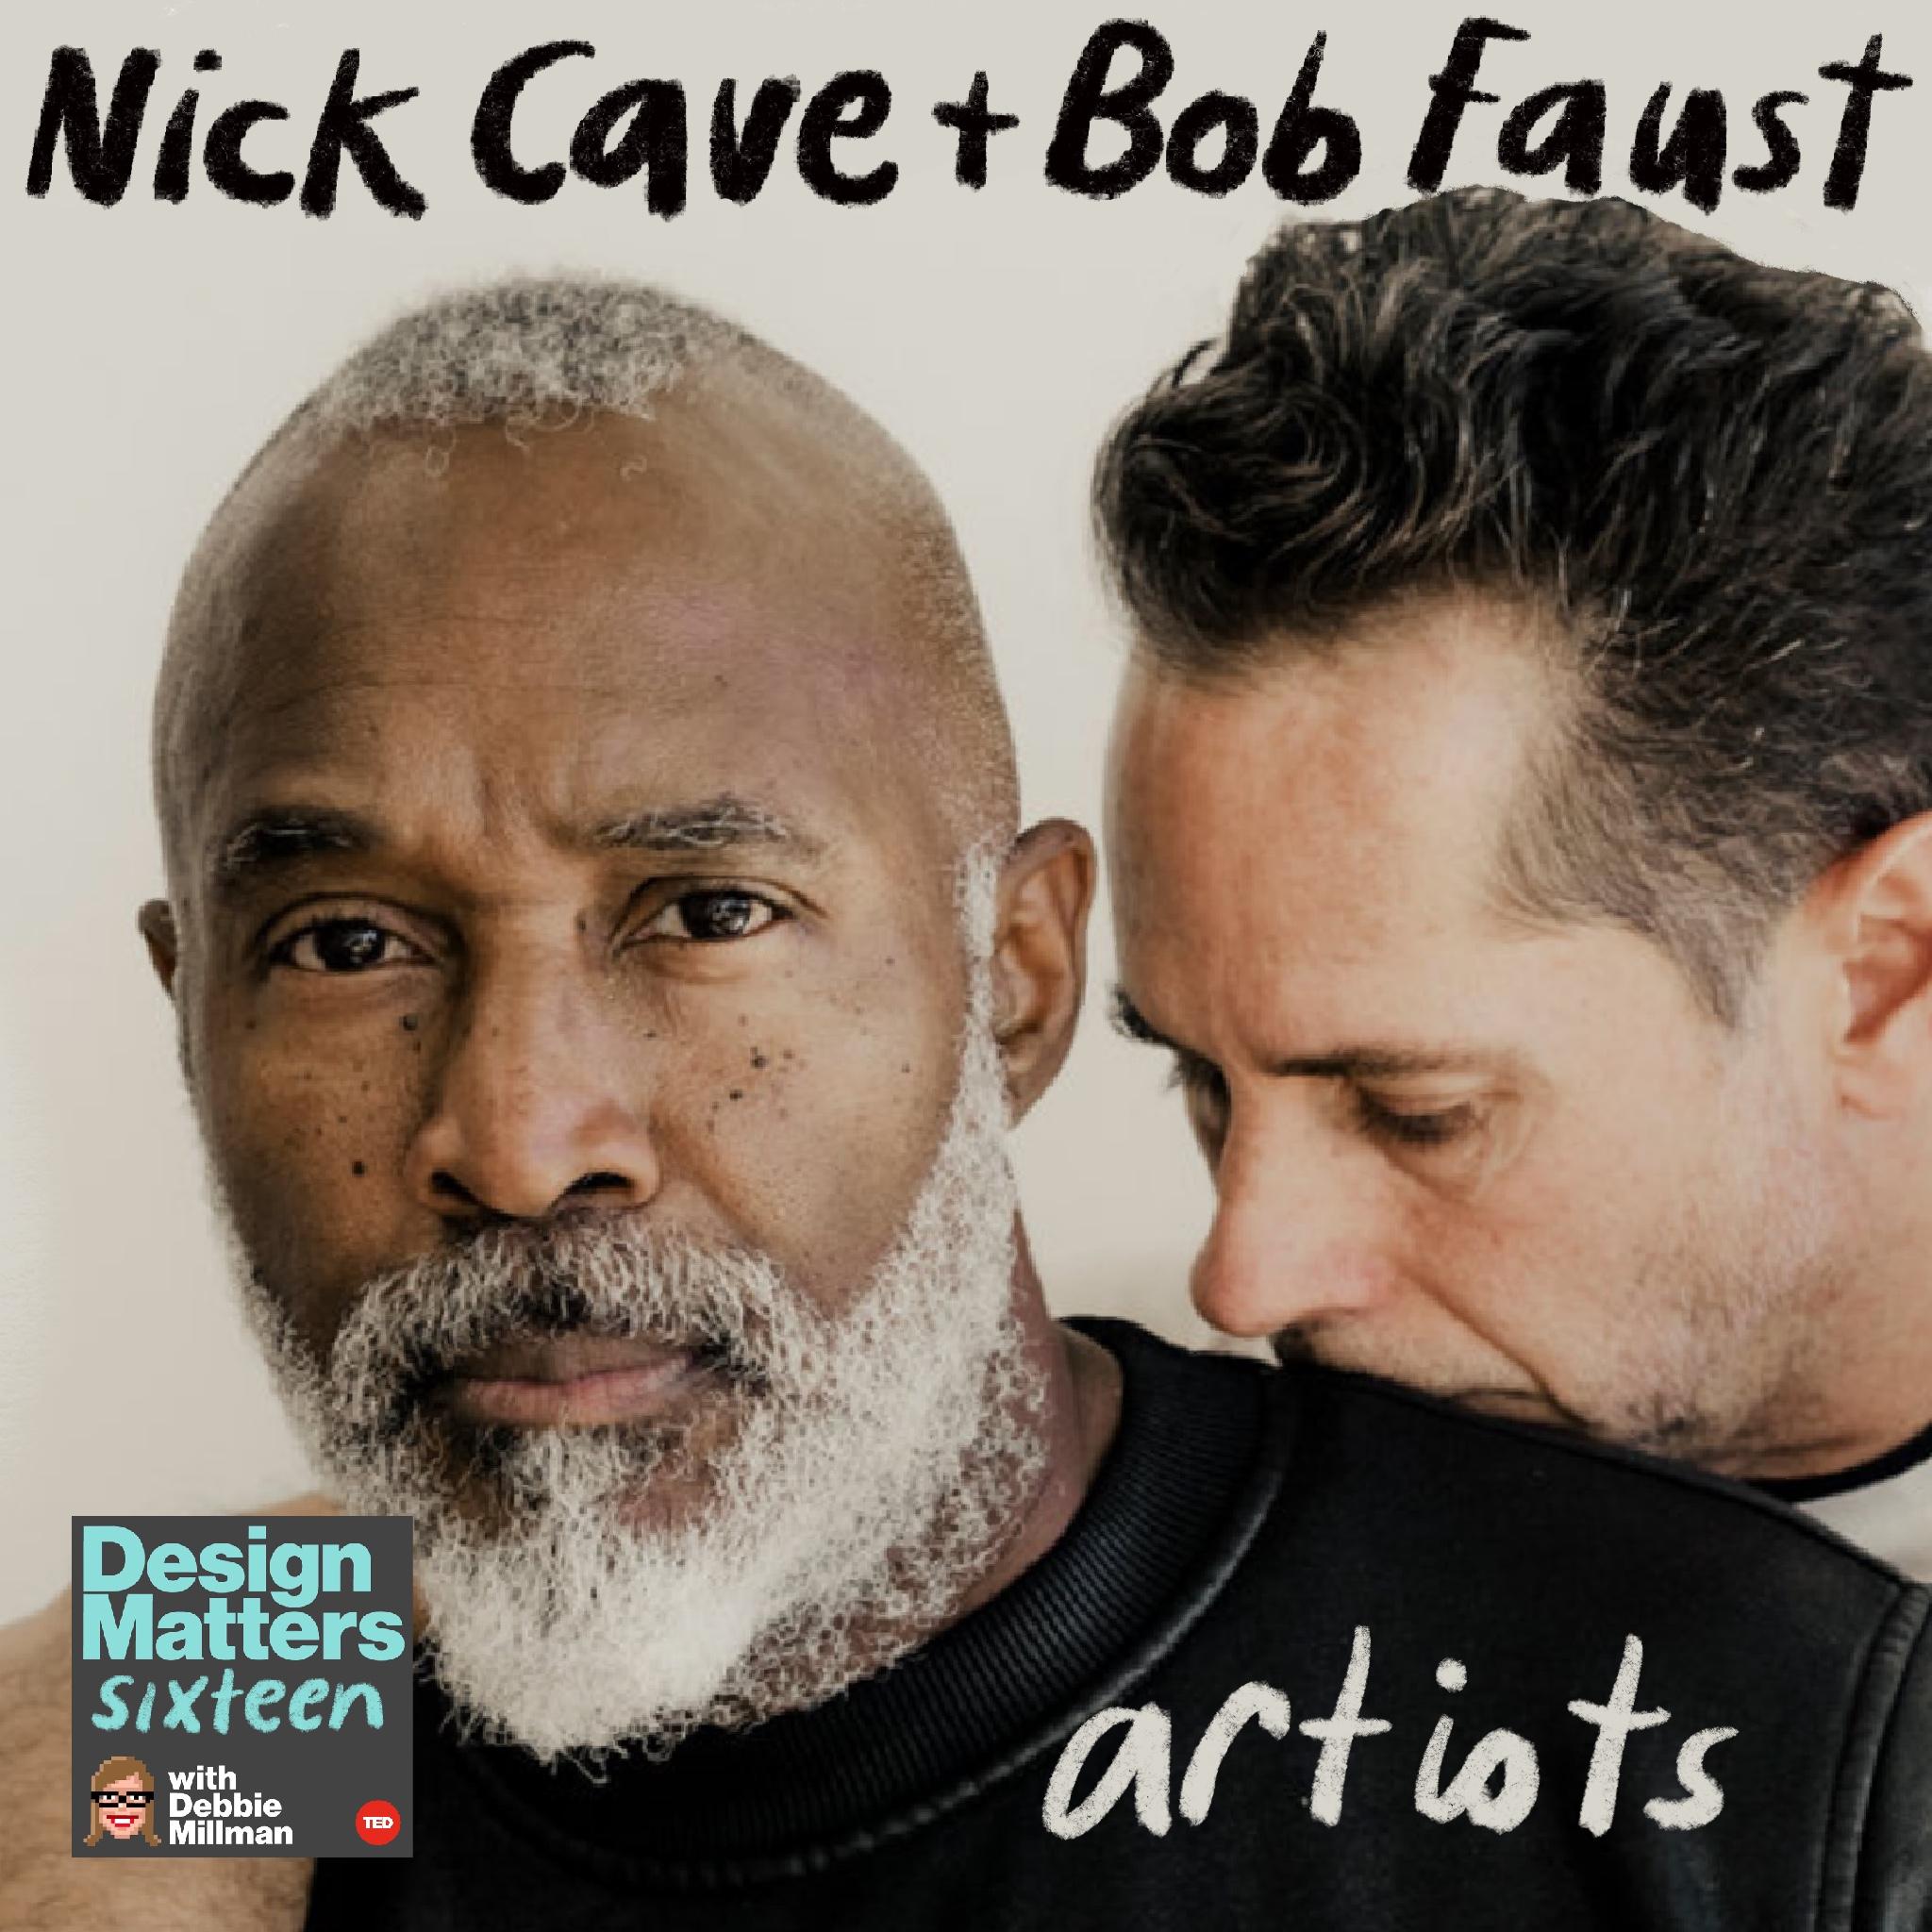 Thumbnail for "Nick Cave & Bob Faust".